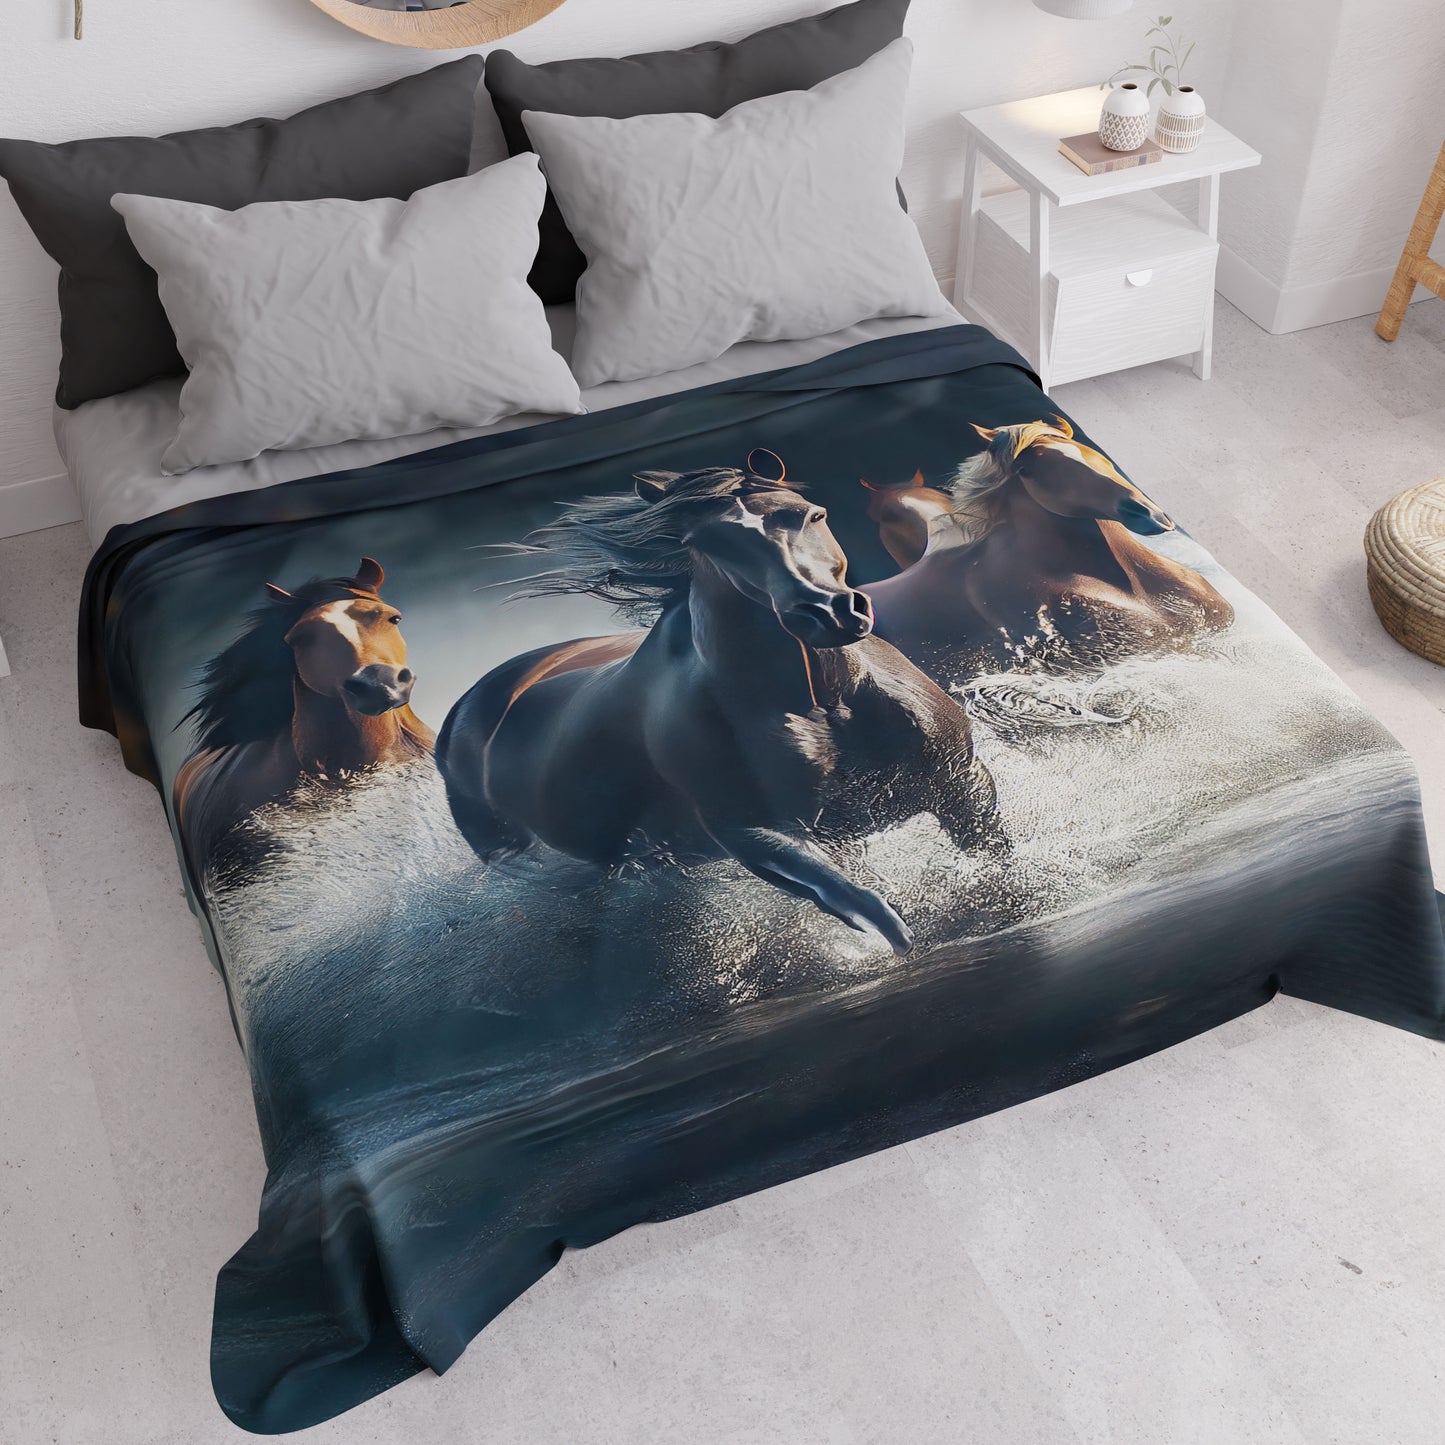 Summer Bedspread, Light Blanket, Sheets Bedspread, Horses